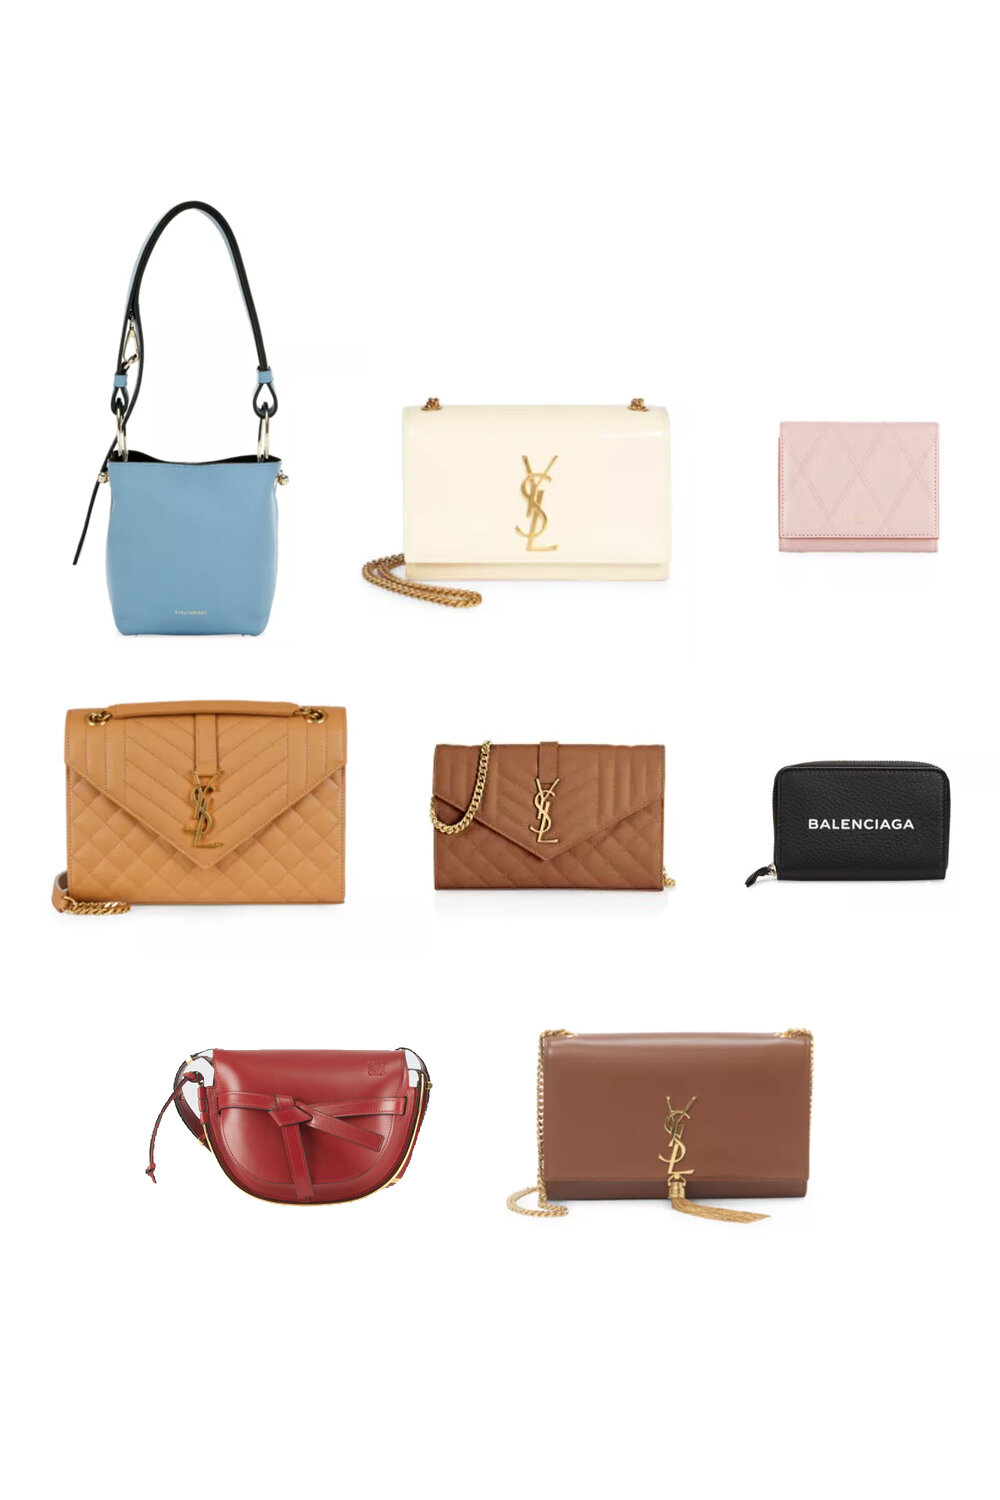 Saks OFF 5TH Designer Handbags on Sale / Summer 2022 Collection